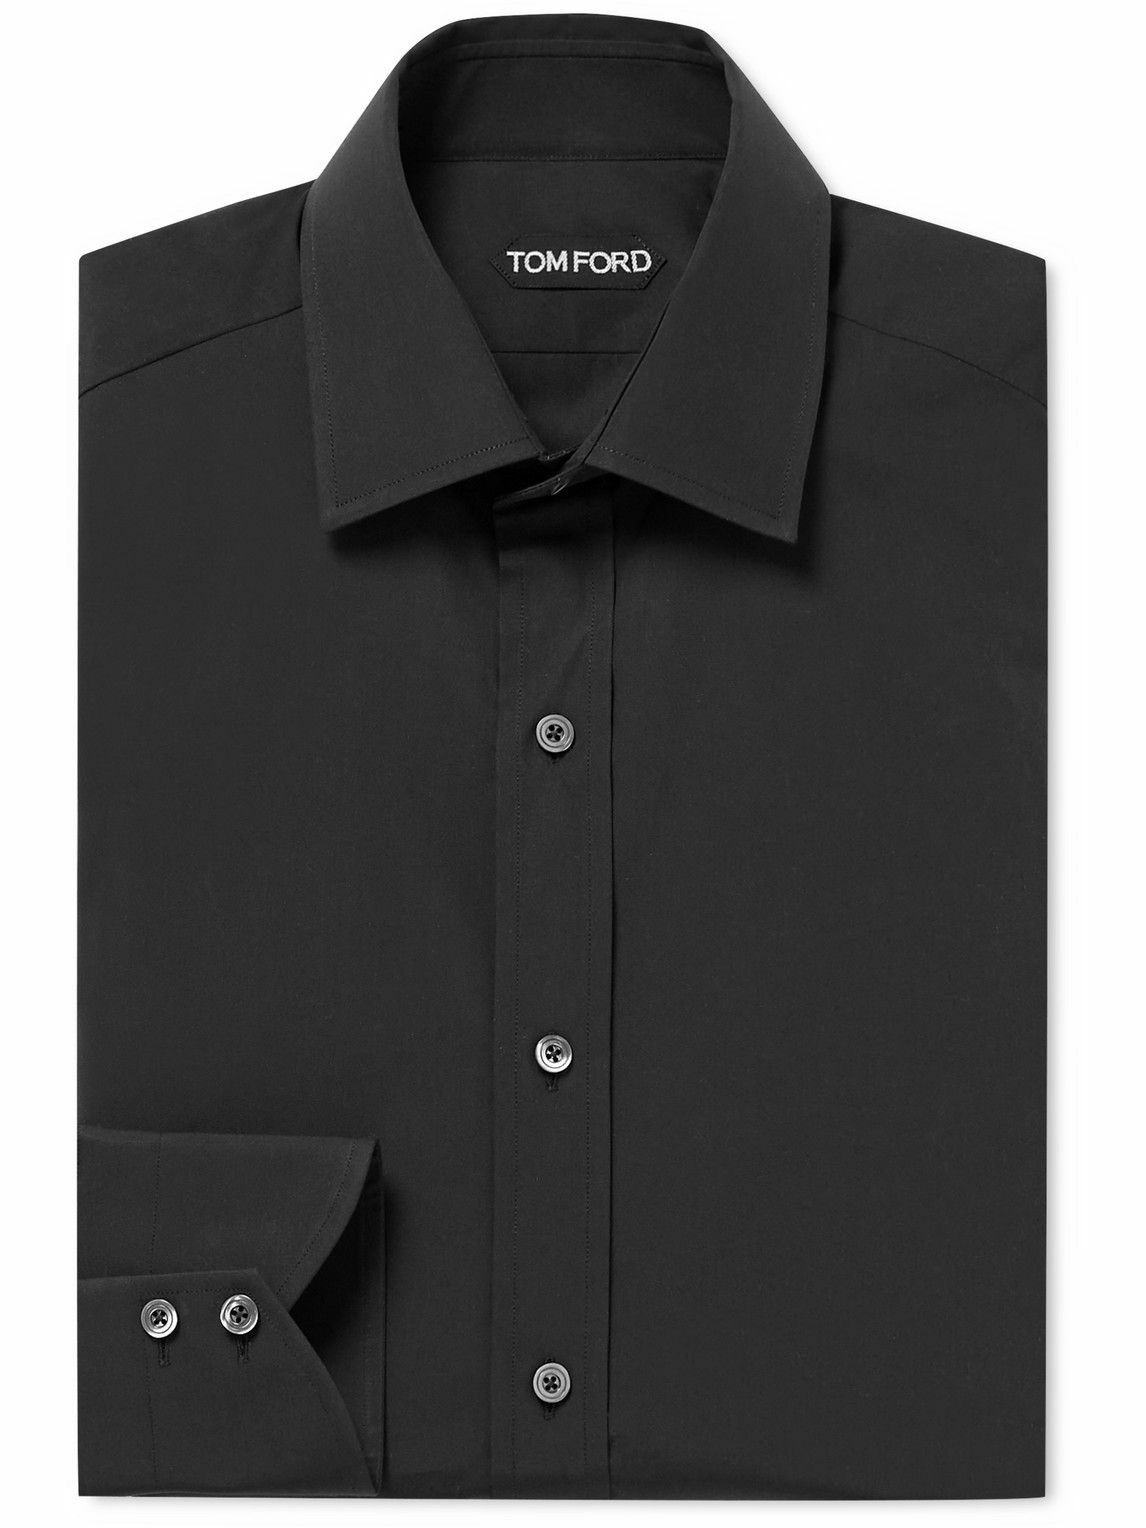 TOM FORD - Cotton-Poplin Shirt - Black TOM FORD